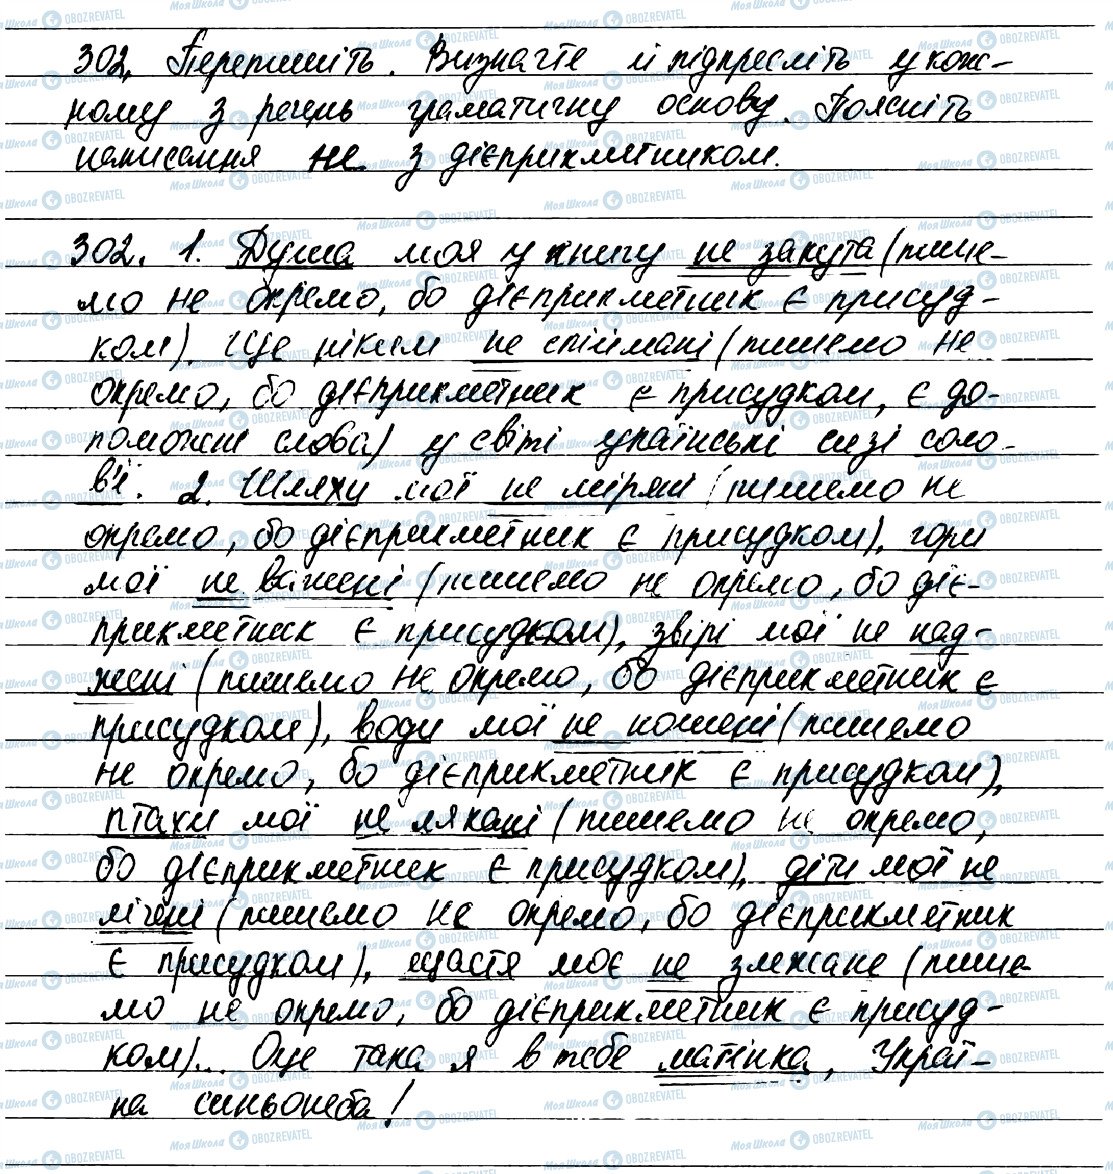 ГДЗ Укр мова 7 класс страница 302